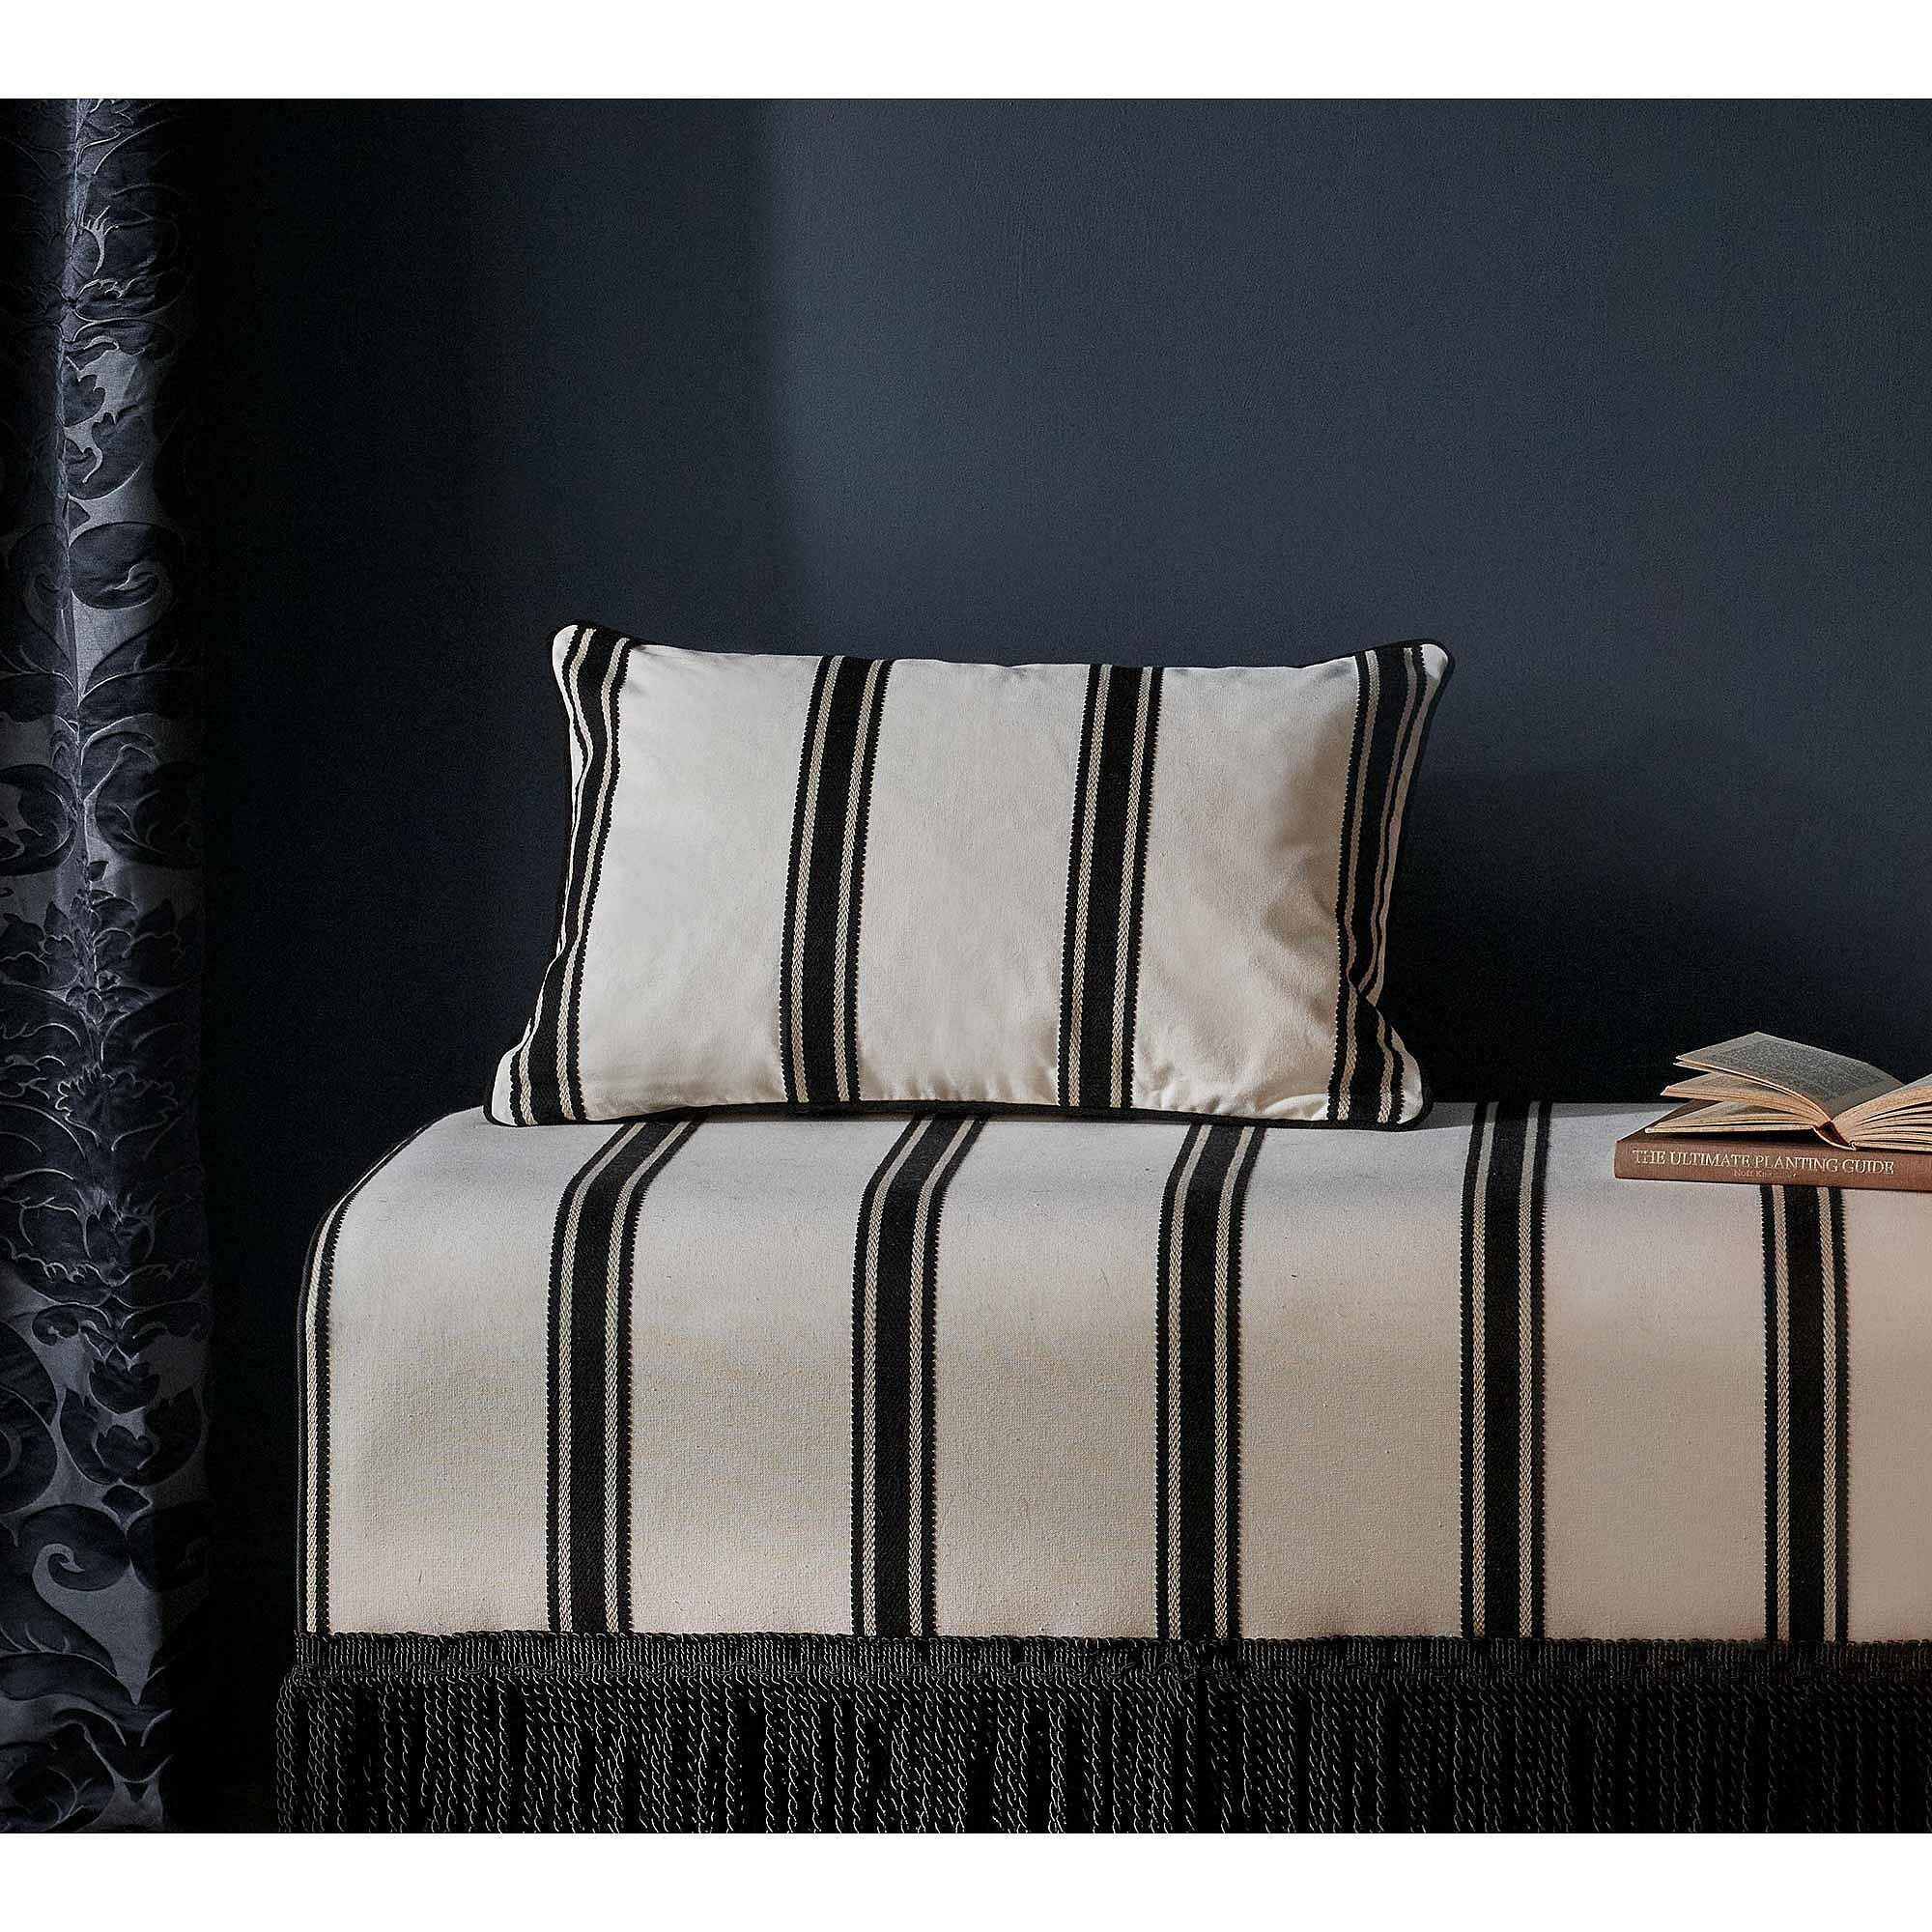 The Granville Stripe Boudoir Cushion - image 1